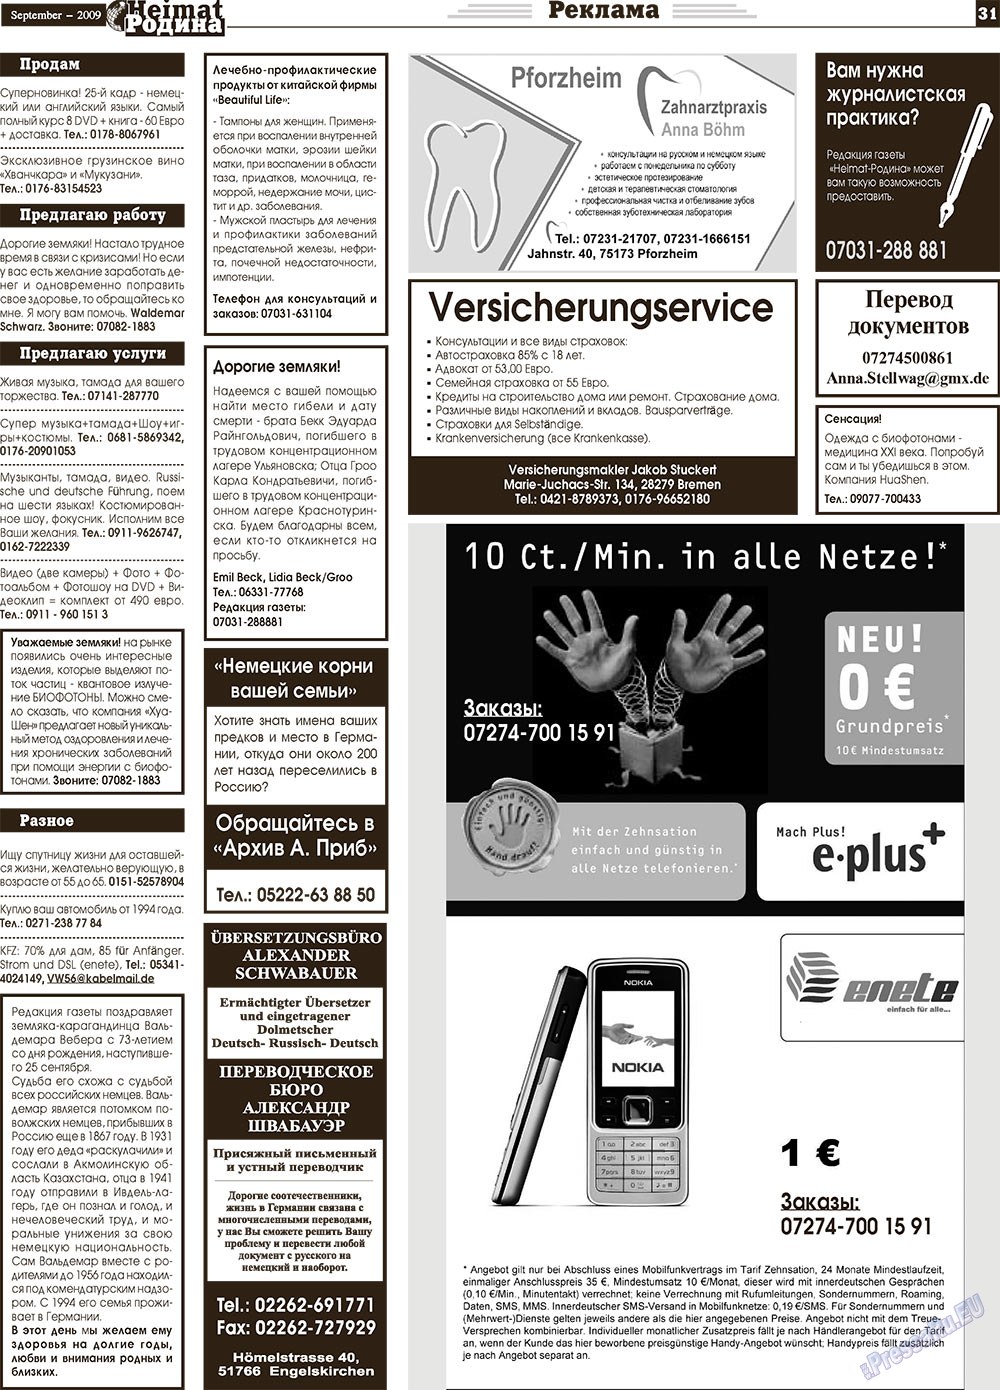 Heimat-Родина, газета. 2009 №9 стр.31